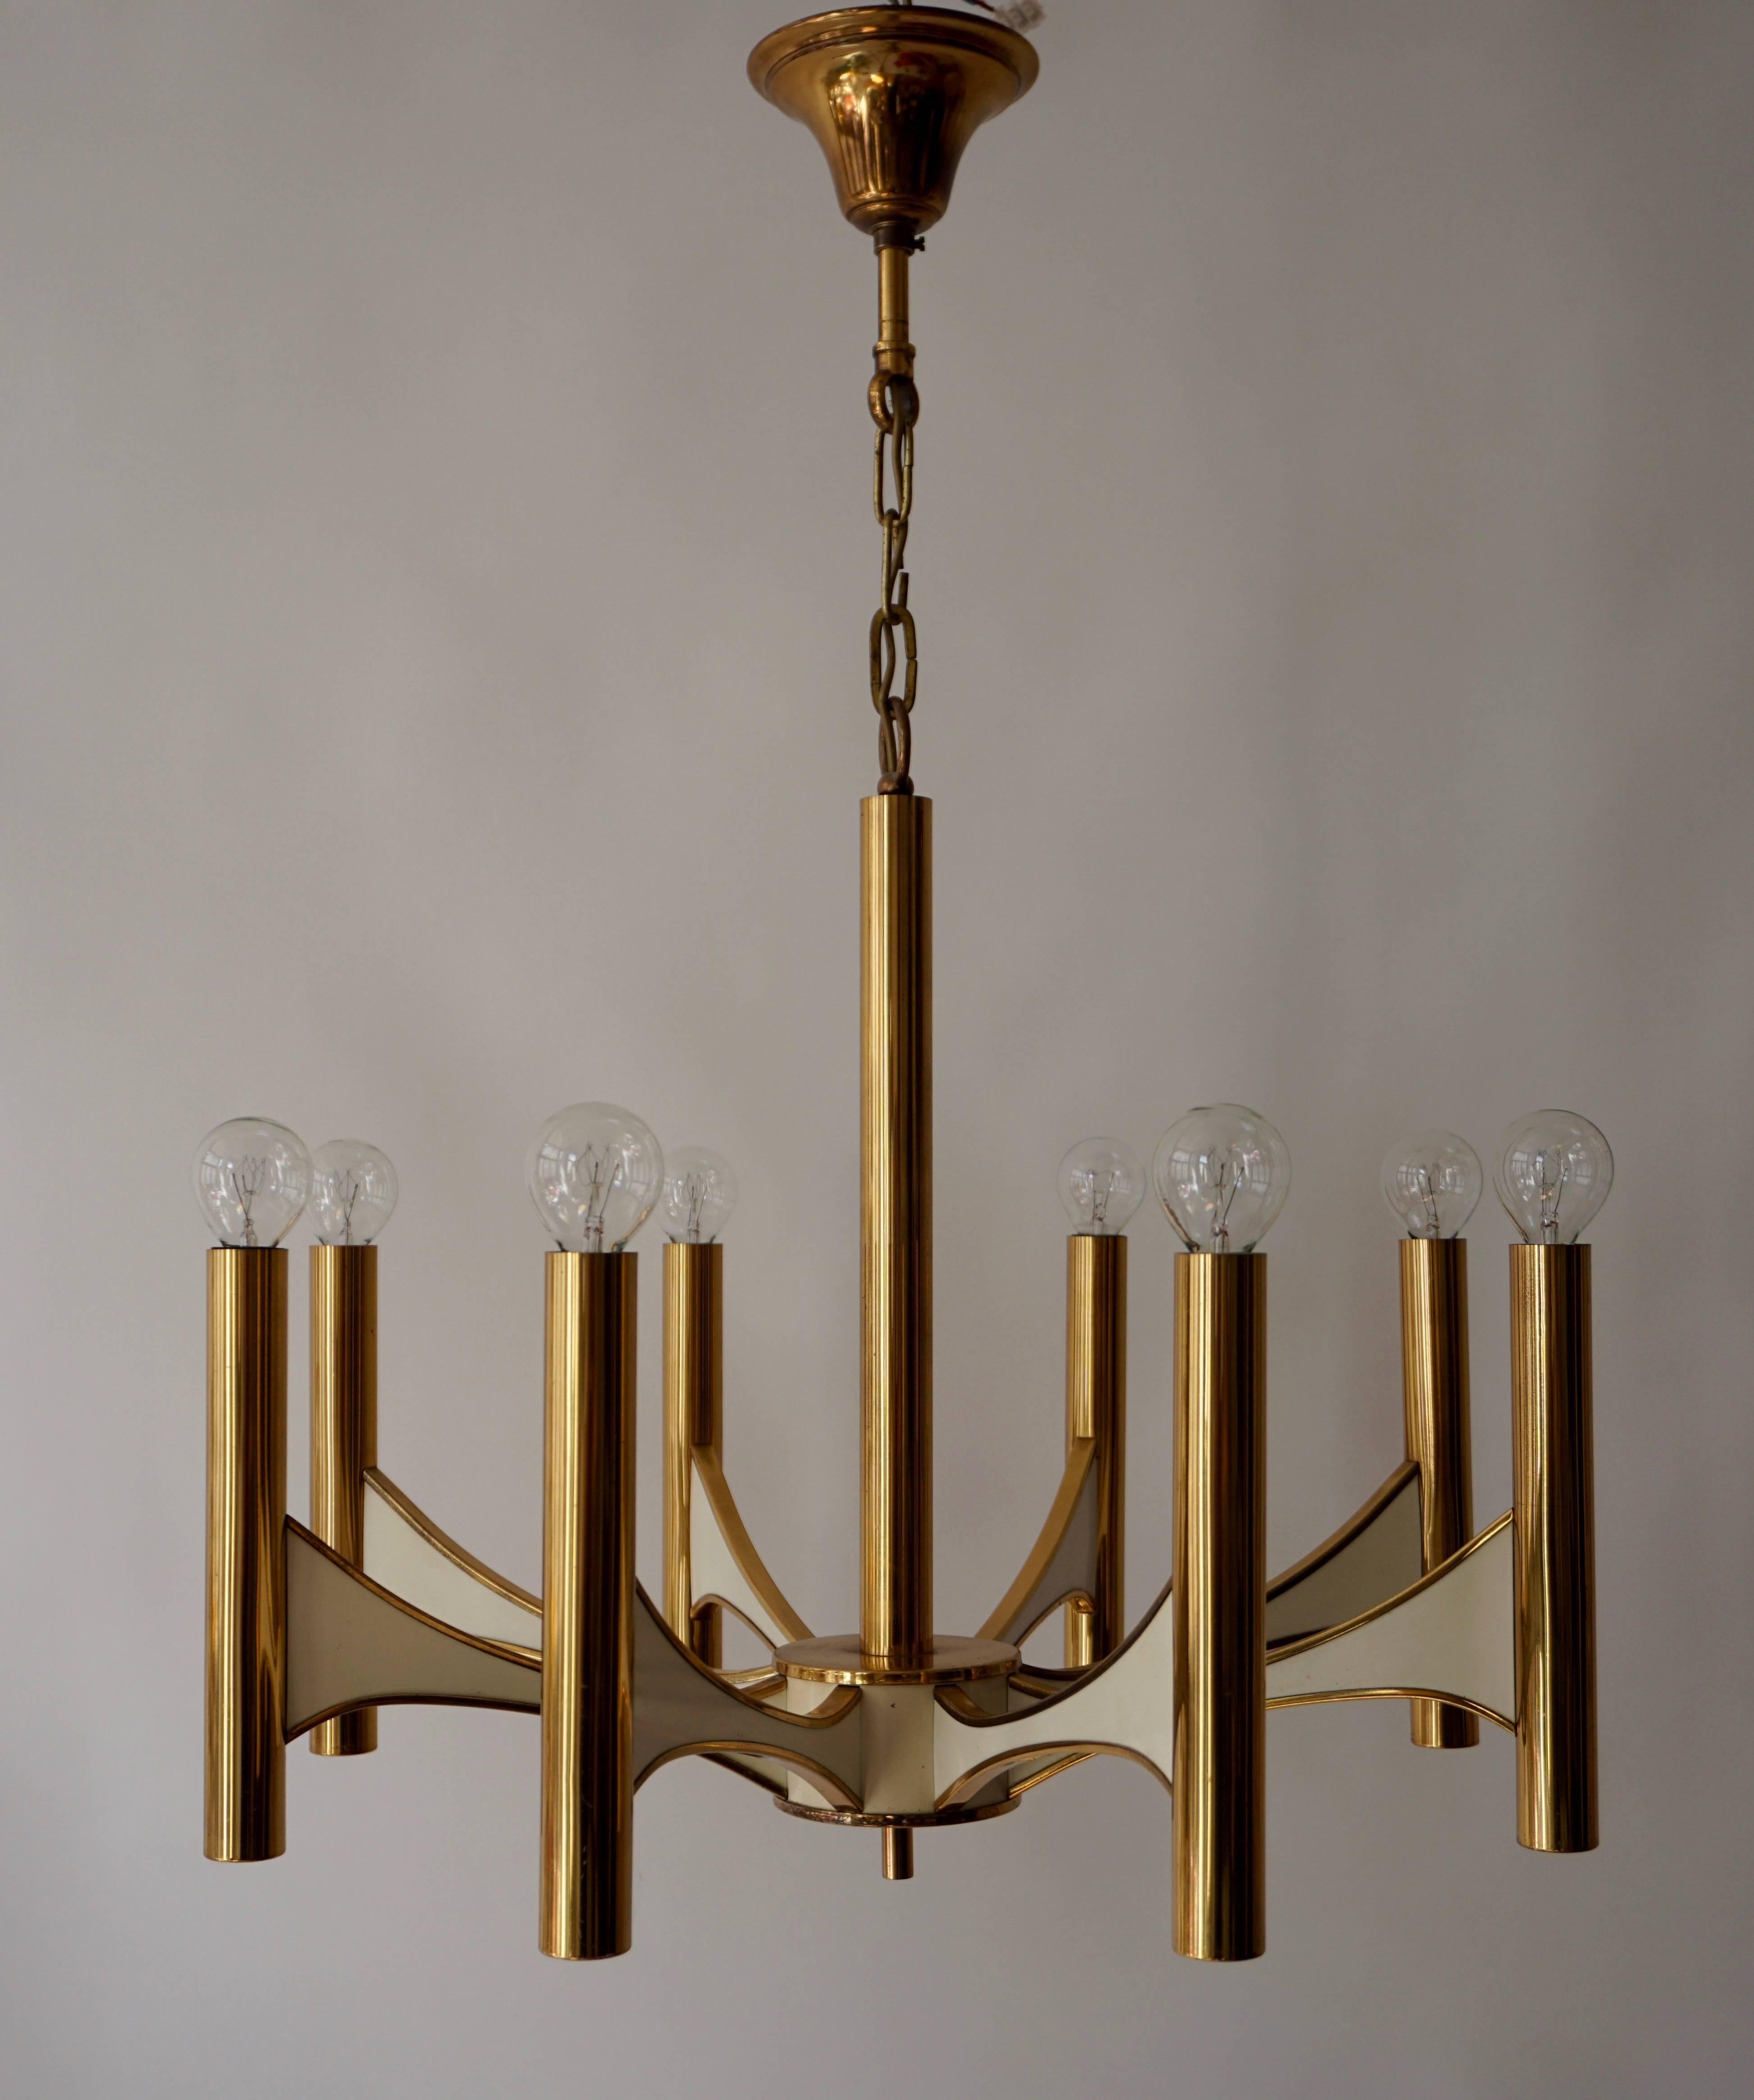 Italian Sciolari chandelier in brass.
Diameter: 57 cm.
Height: 44 cm.
Height with the chain 75 cm.